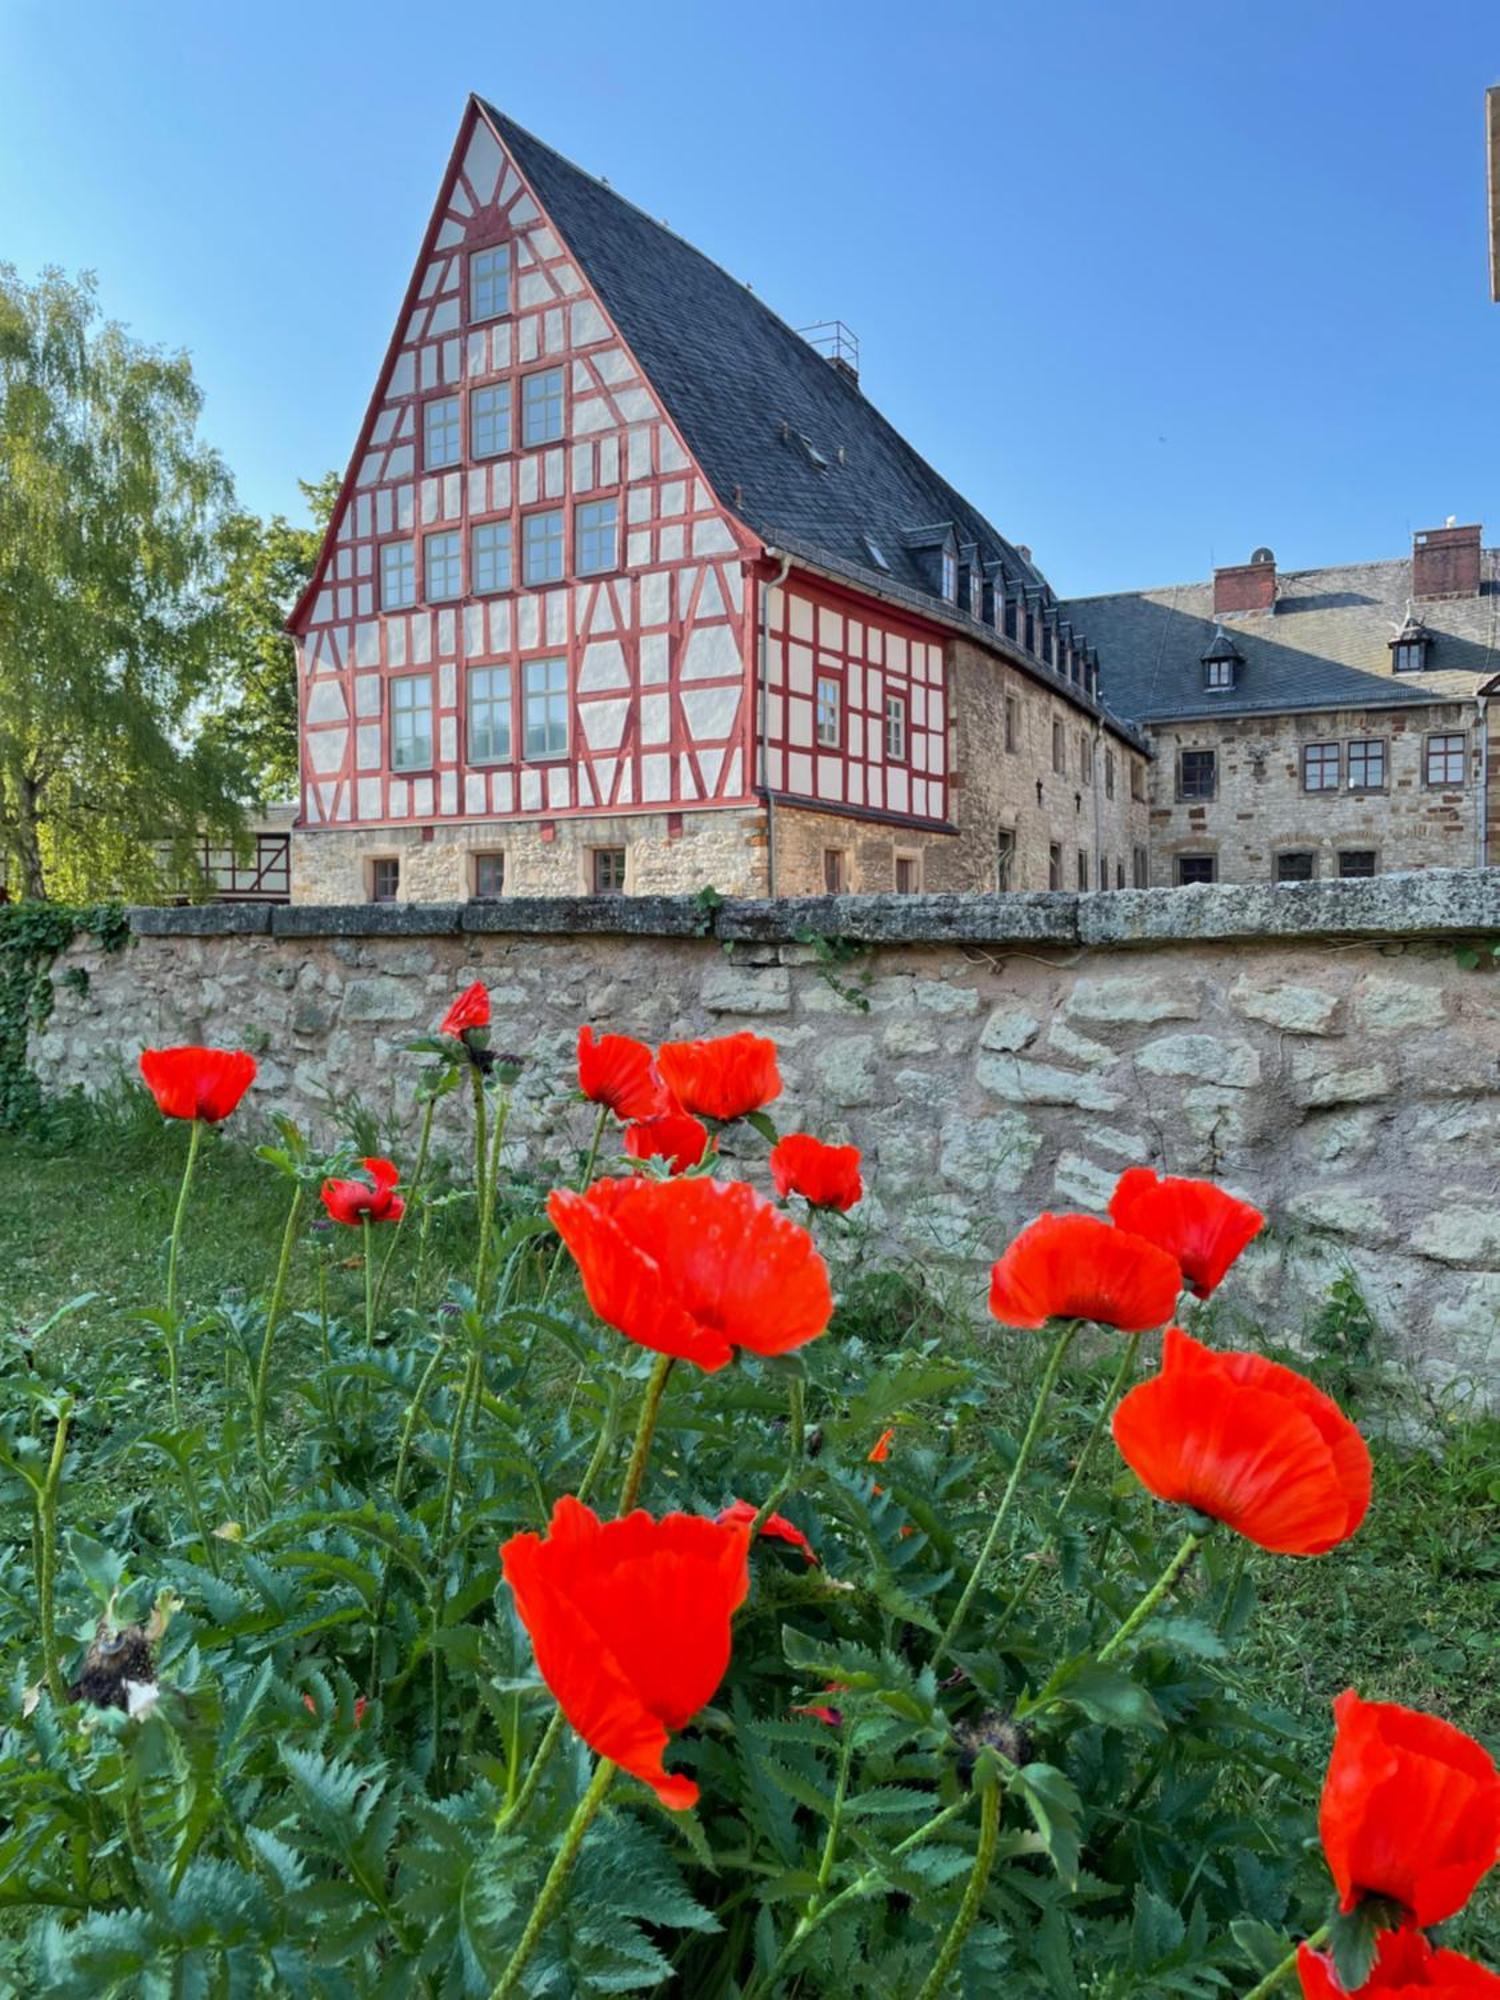 Schloss Beichlingen 外观 照片